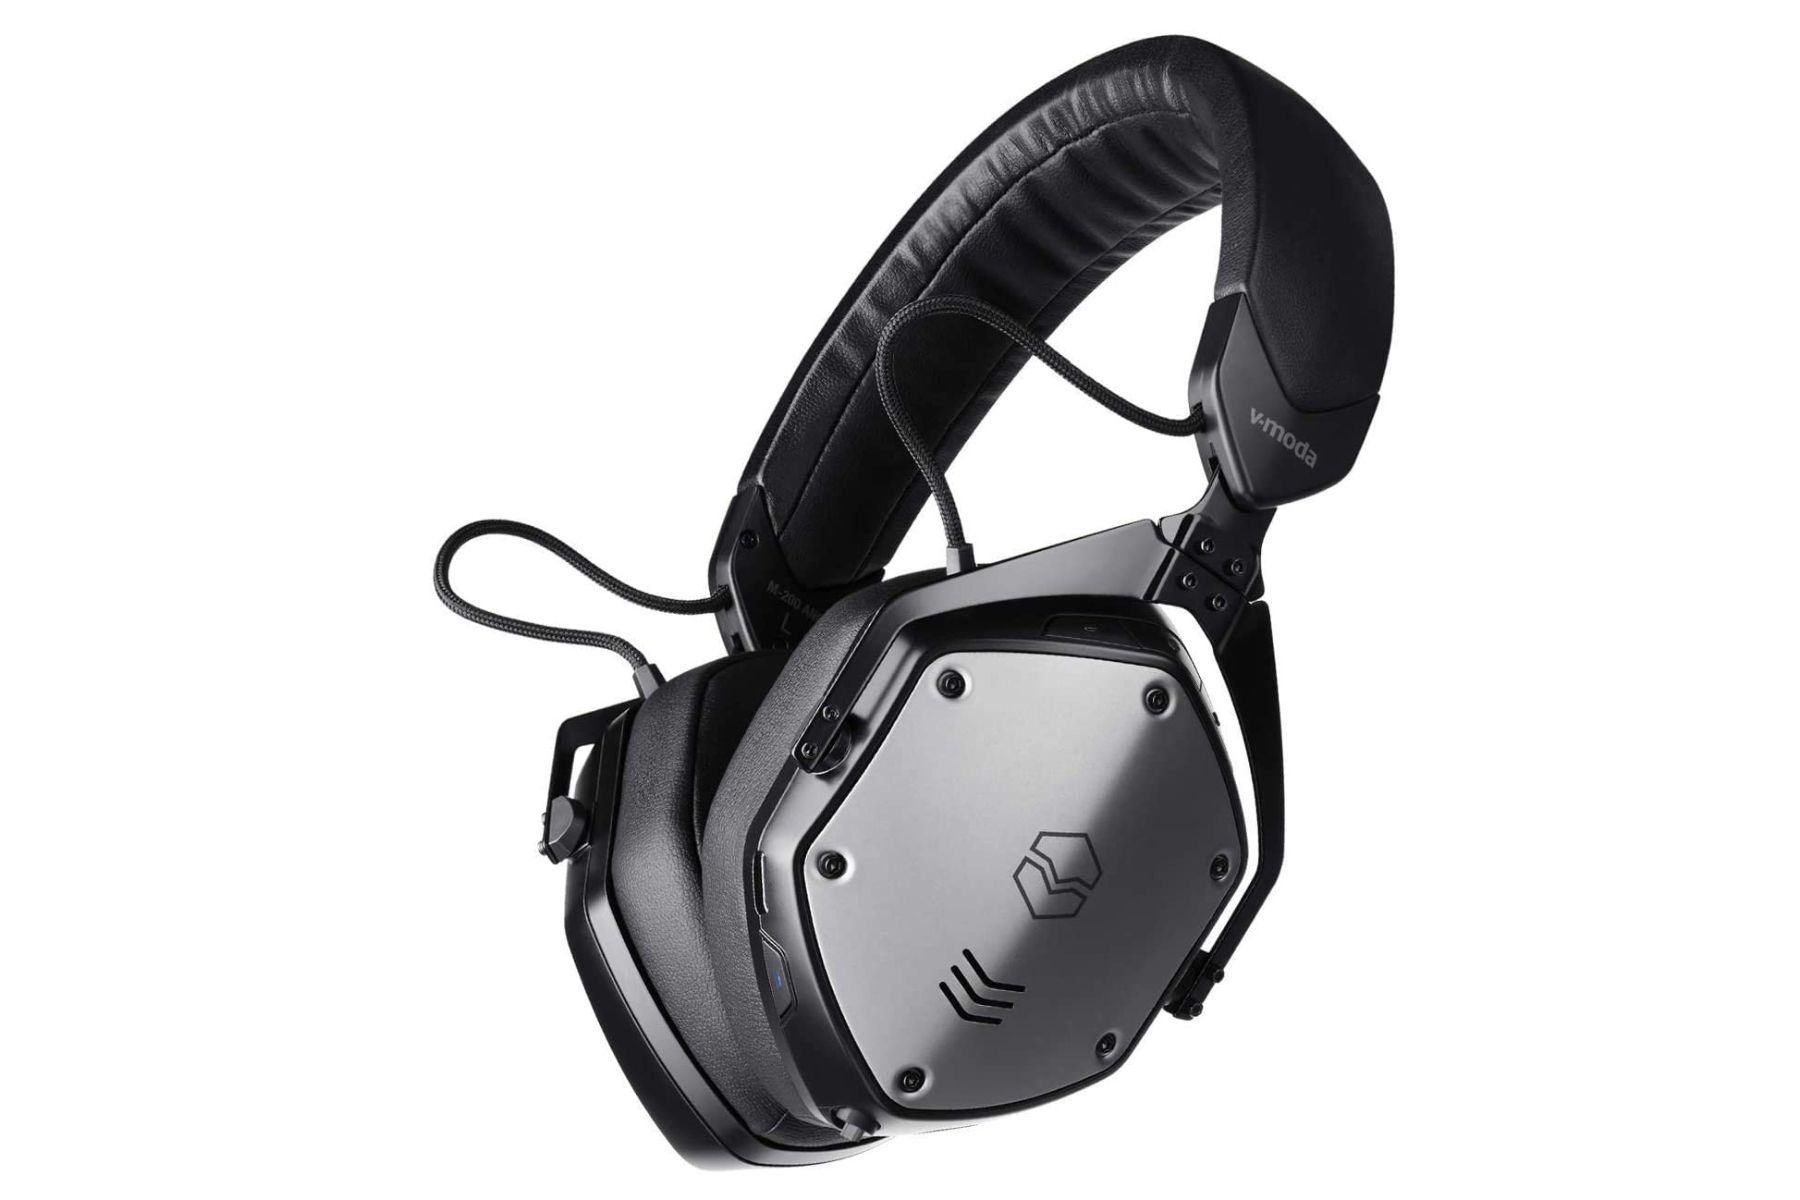 V-MODA M-200 ANC Wireless Noise-Canceling Headphones